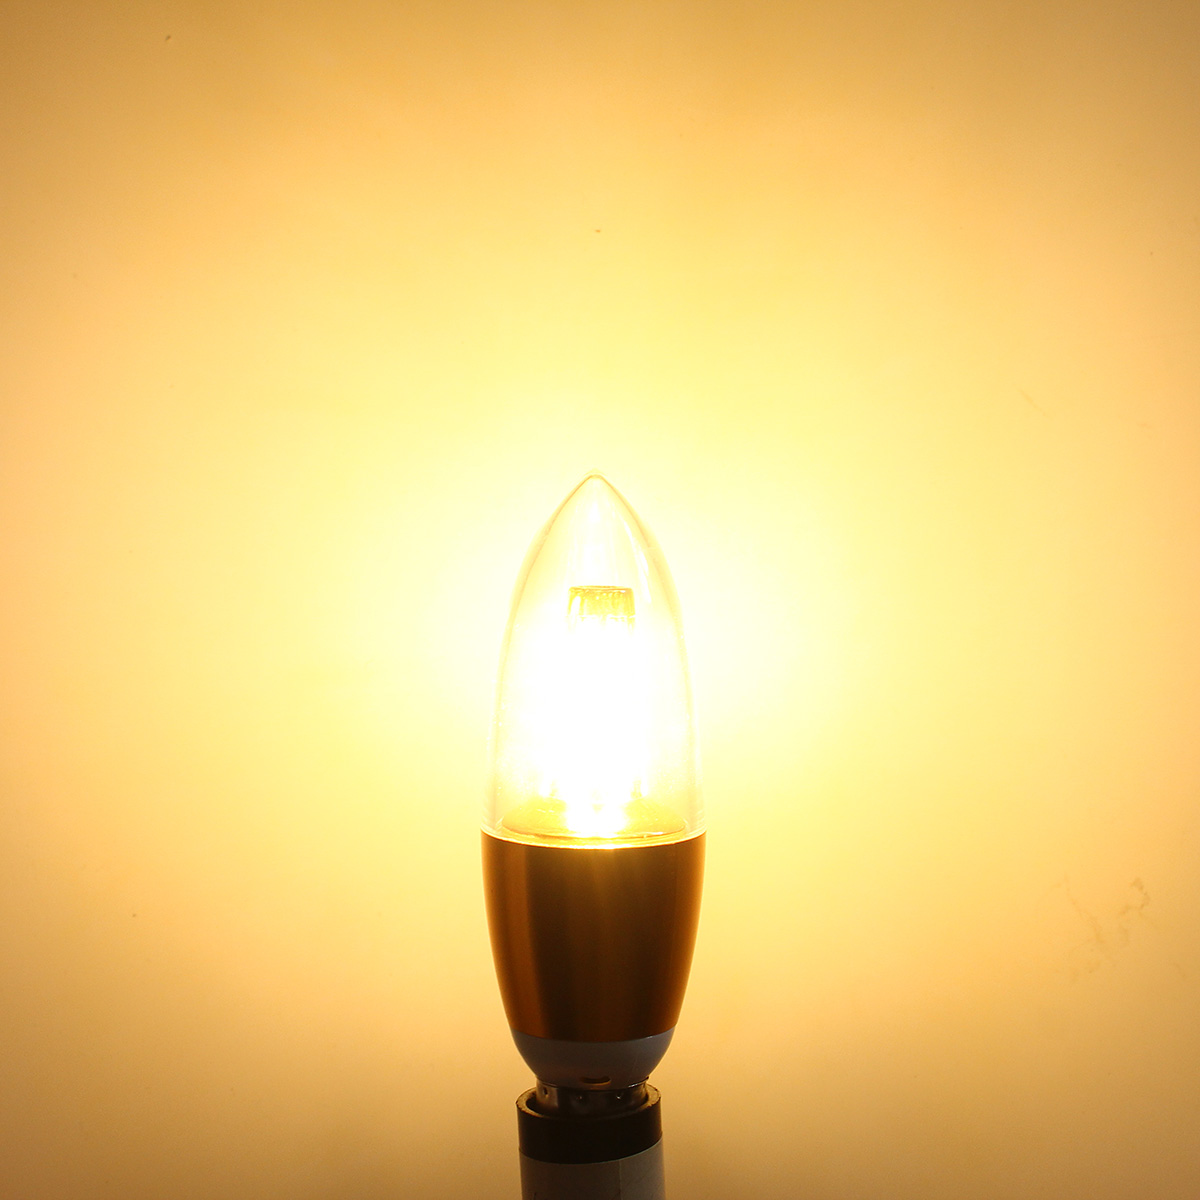 KingSo-LED-Filament-Light-Bulb-Warm-WhiteWhite-Light-550LM--E12-Candelabra-Base-Lamp-55W-Incandescen-1890514-2